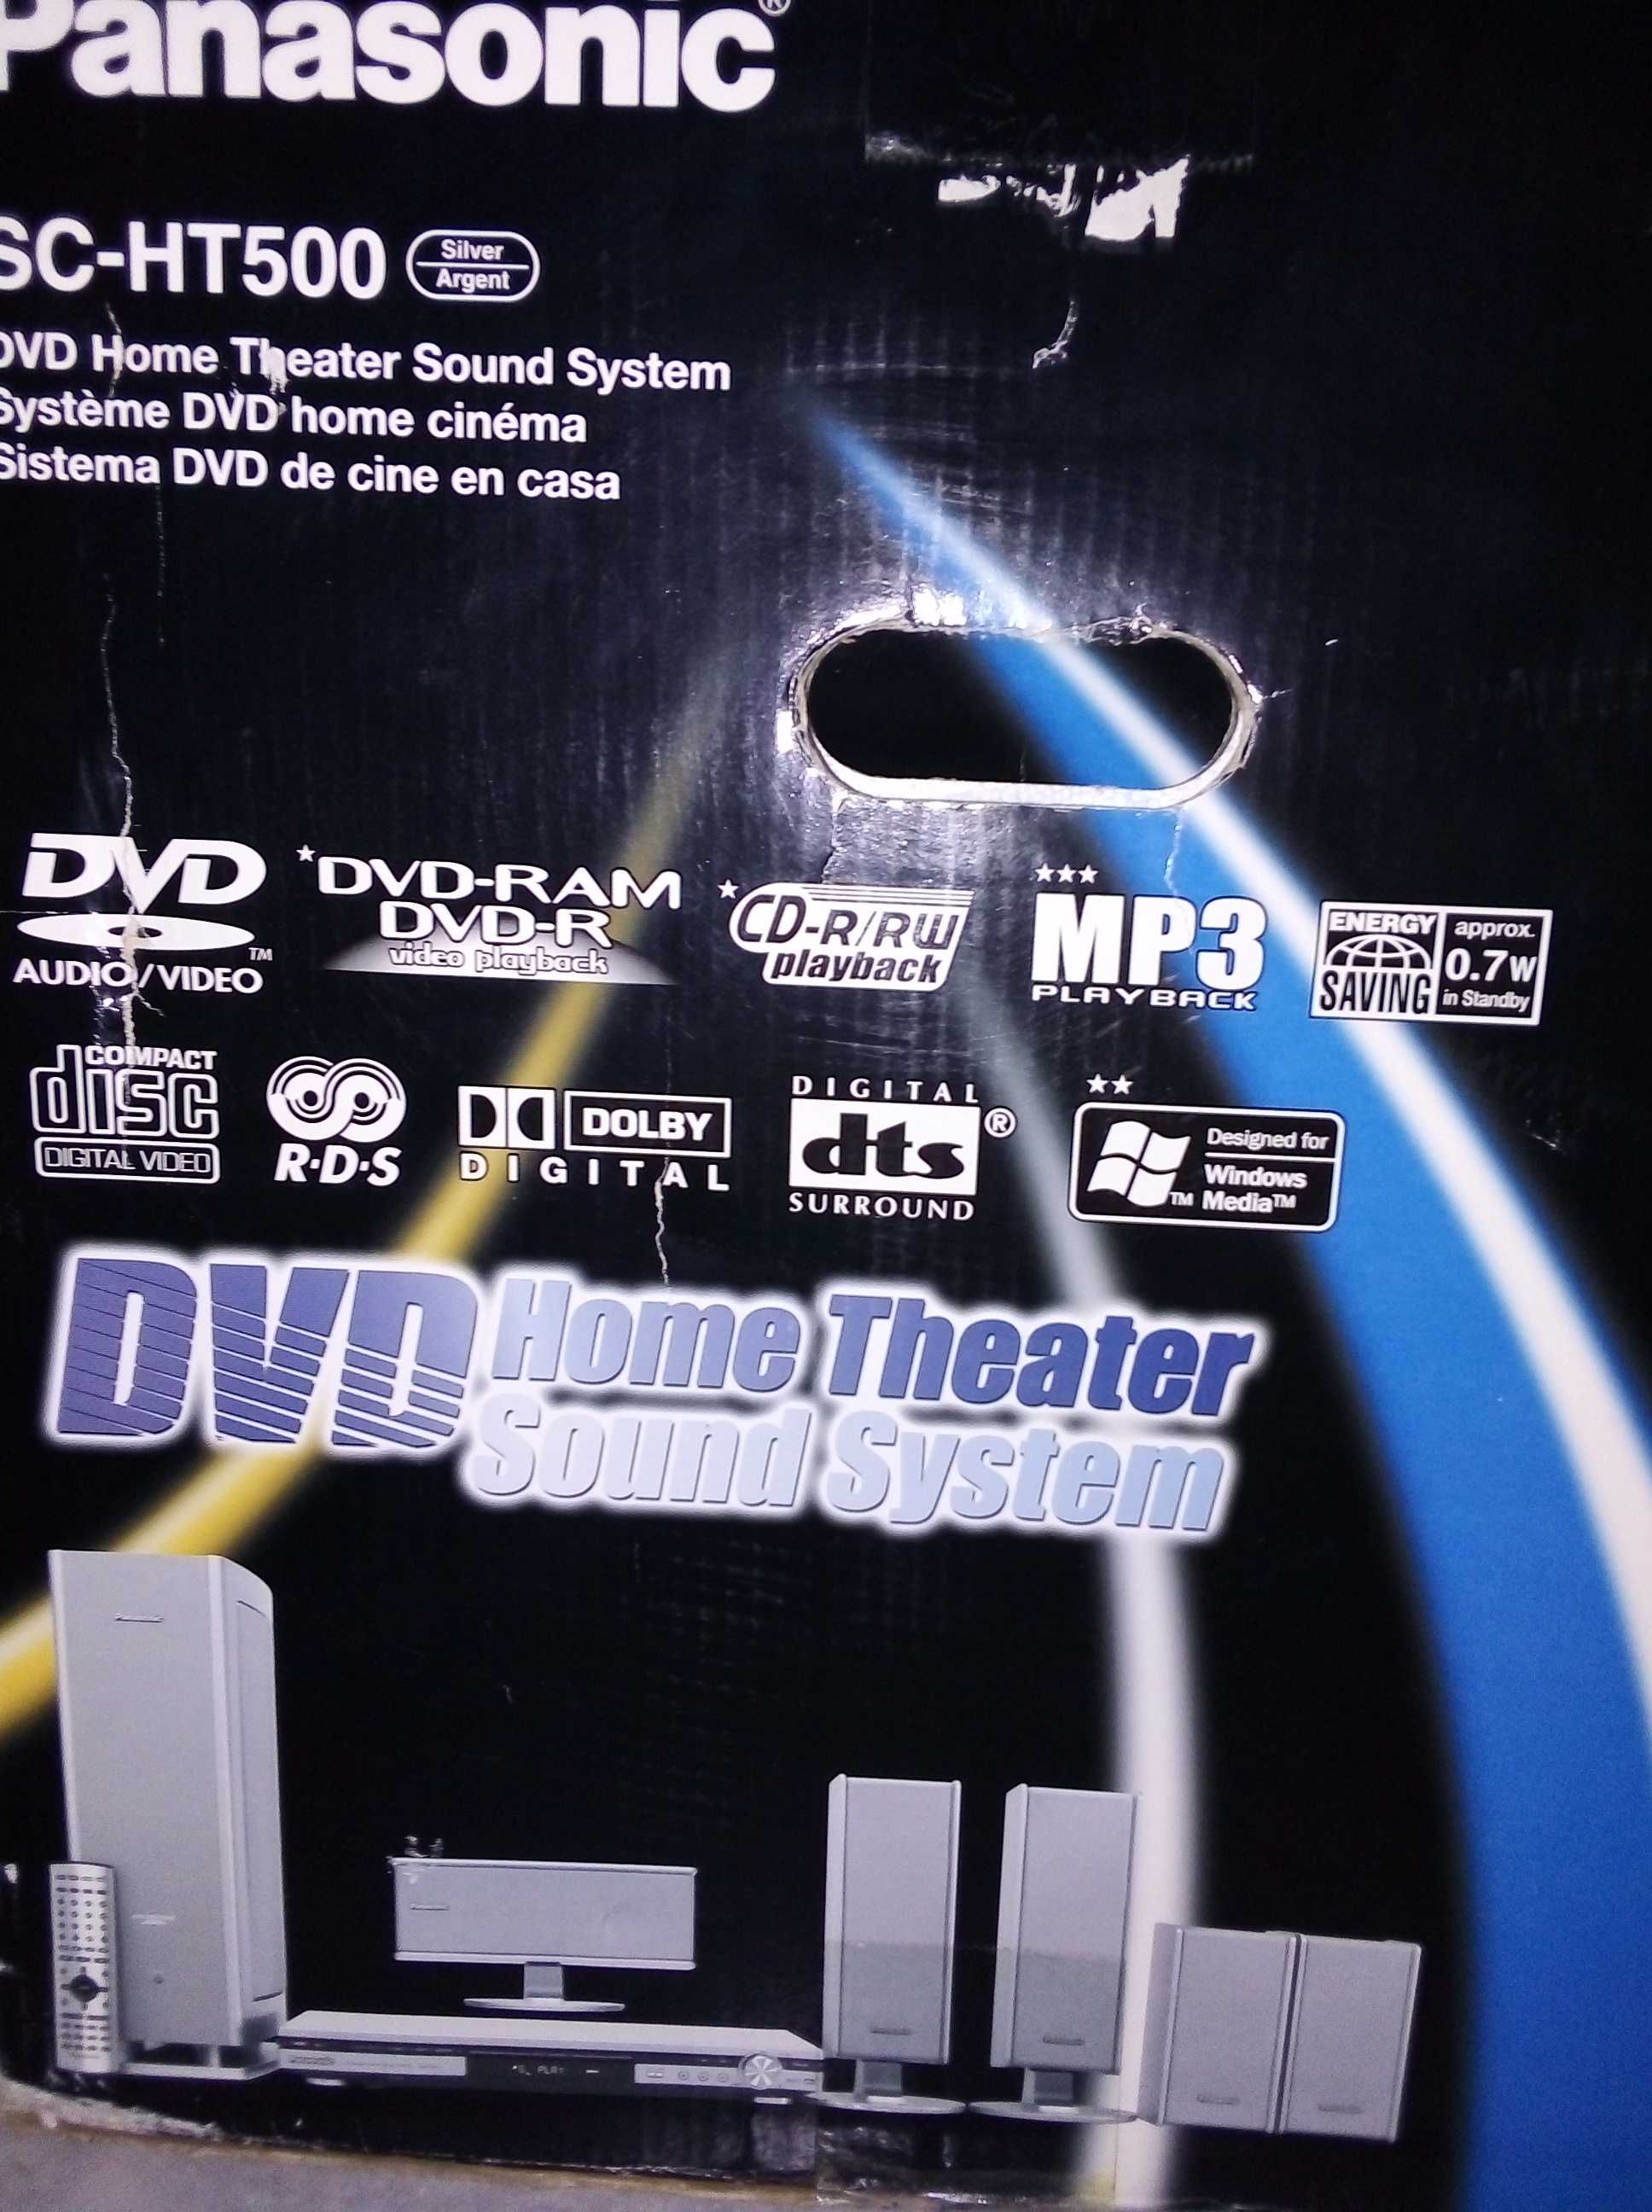 (NOVO) Panasonic sc-ht500 DVD home theater sound system